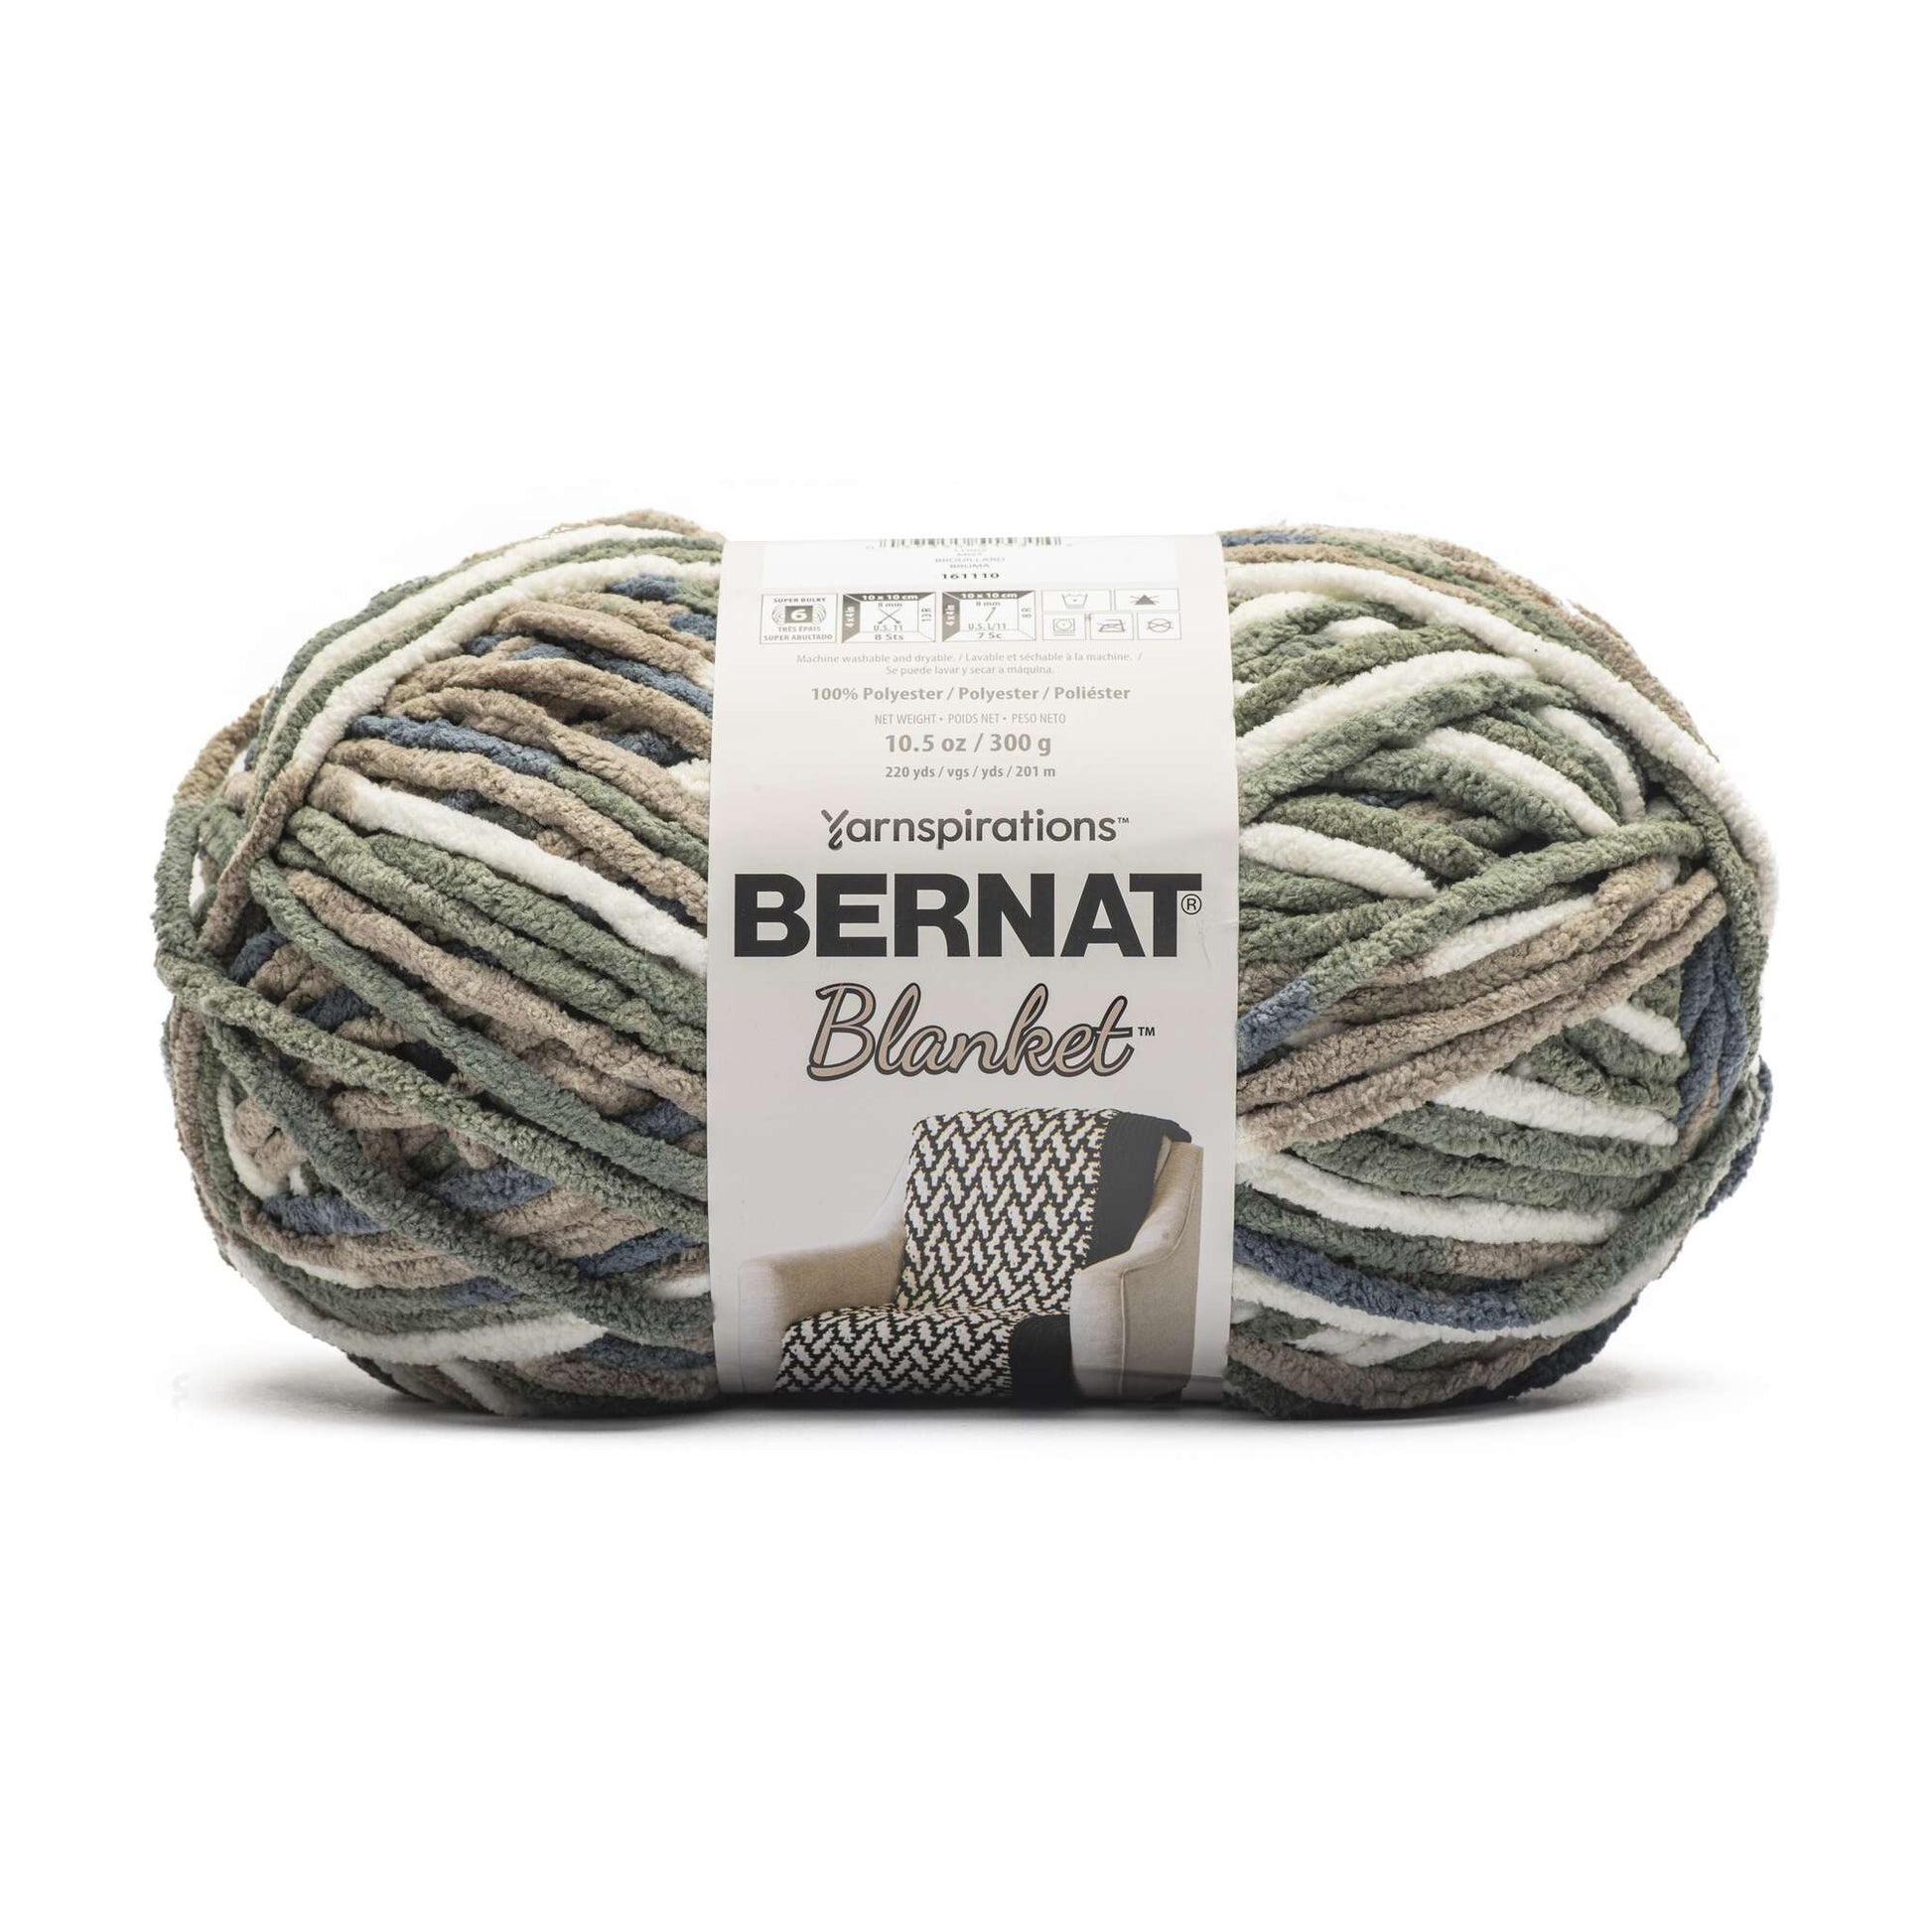 Bernat Blanket Yarn (300g/10.5oz) Mist